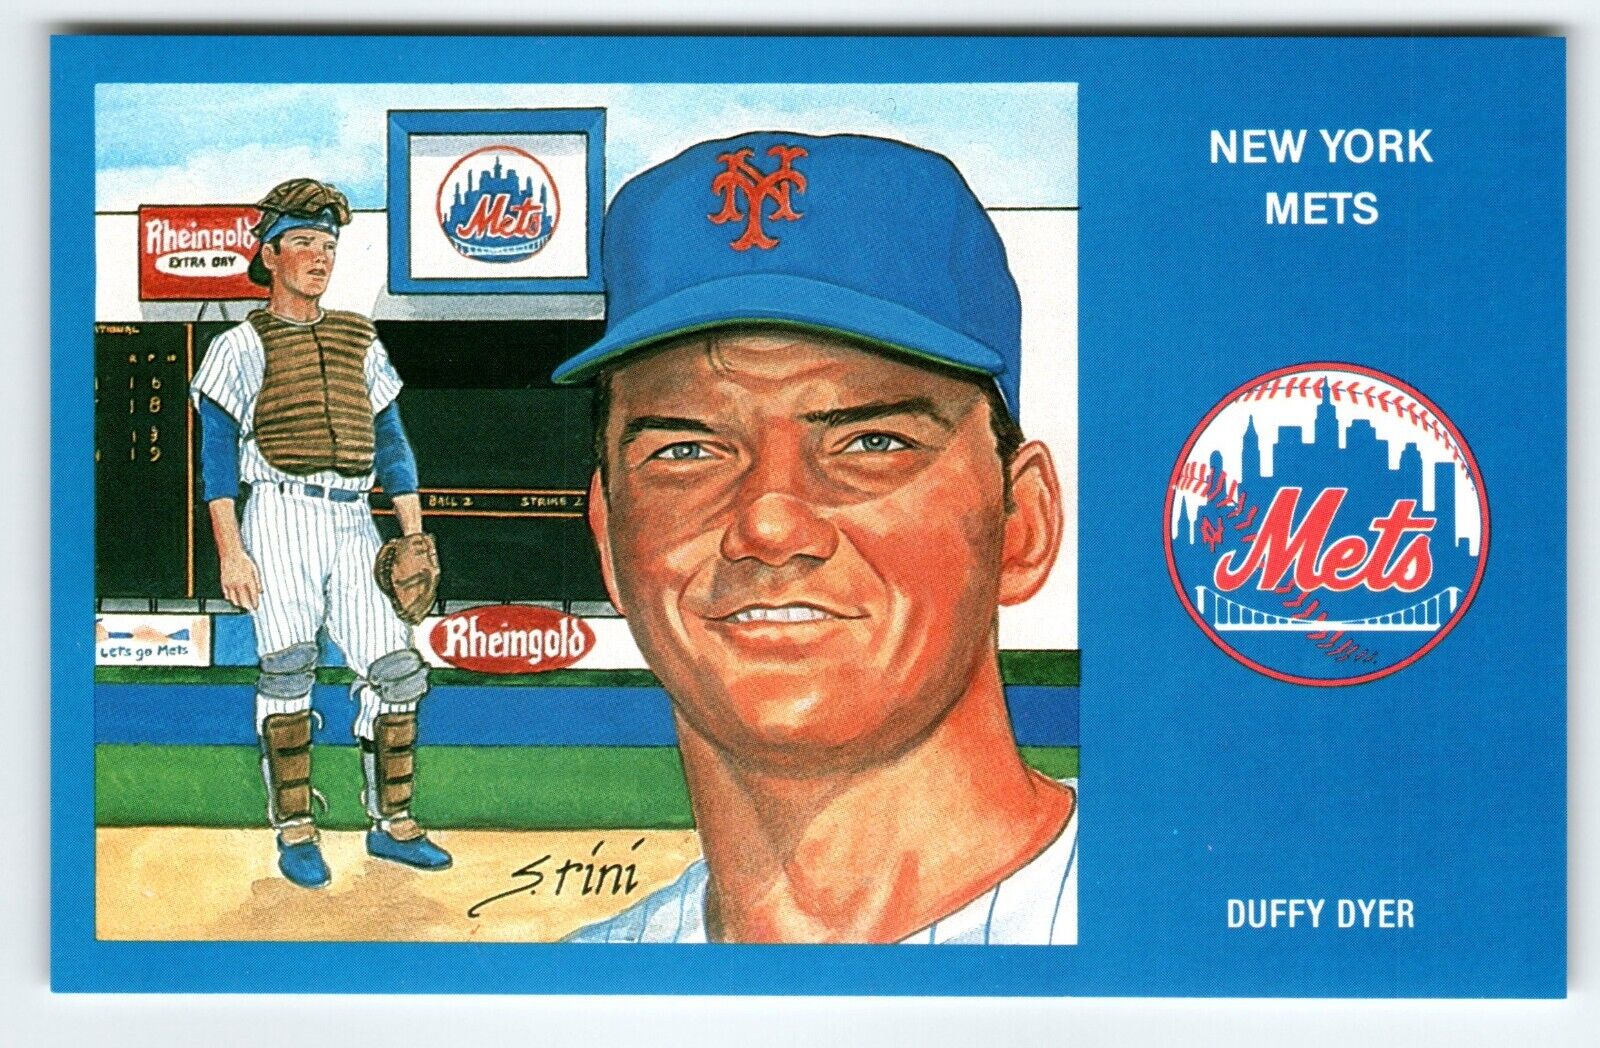 1969 NY Mets Baseball Postcard Susan Rini Duffy Dyer Unused Limited Edition